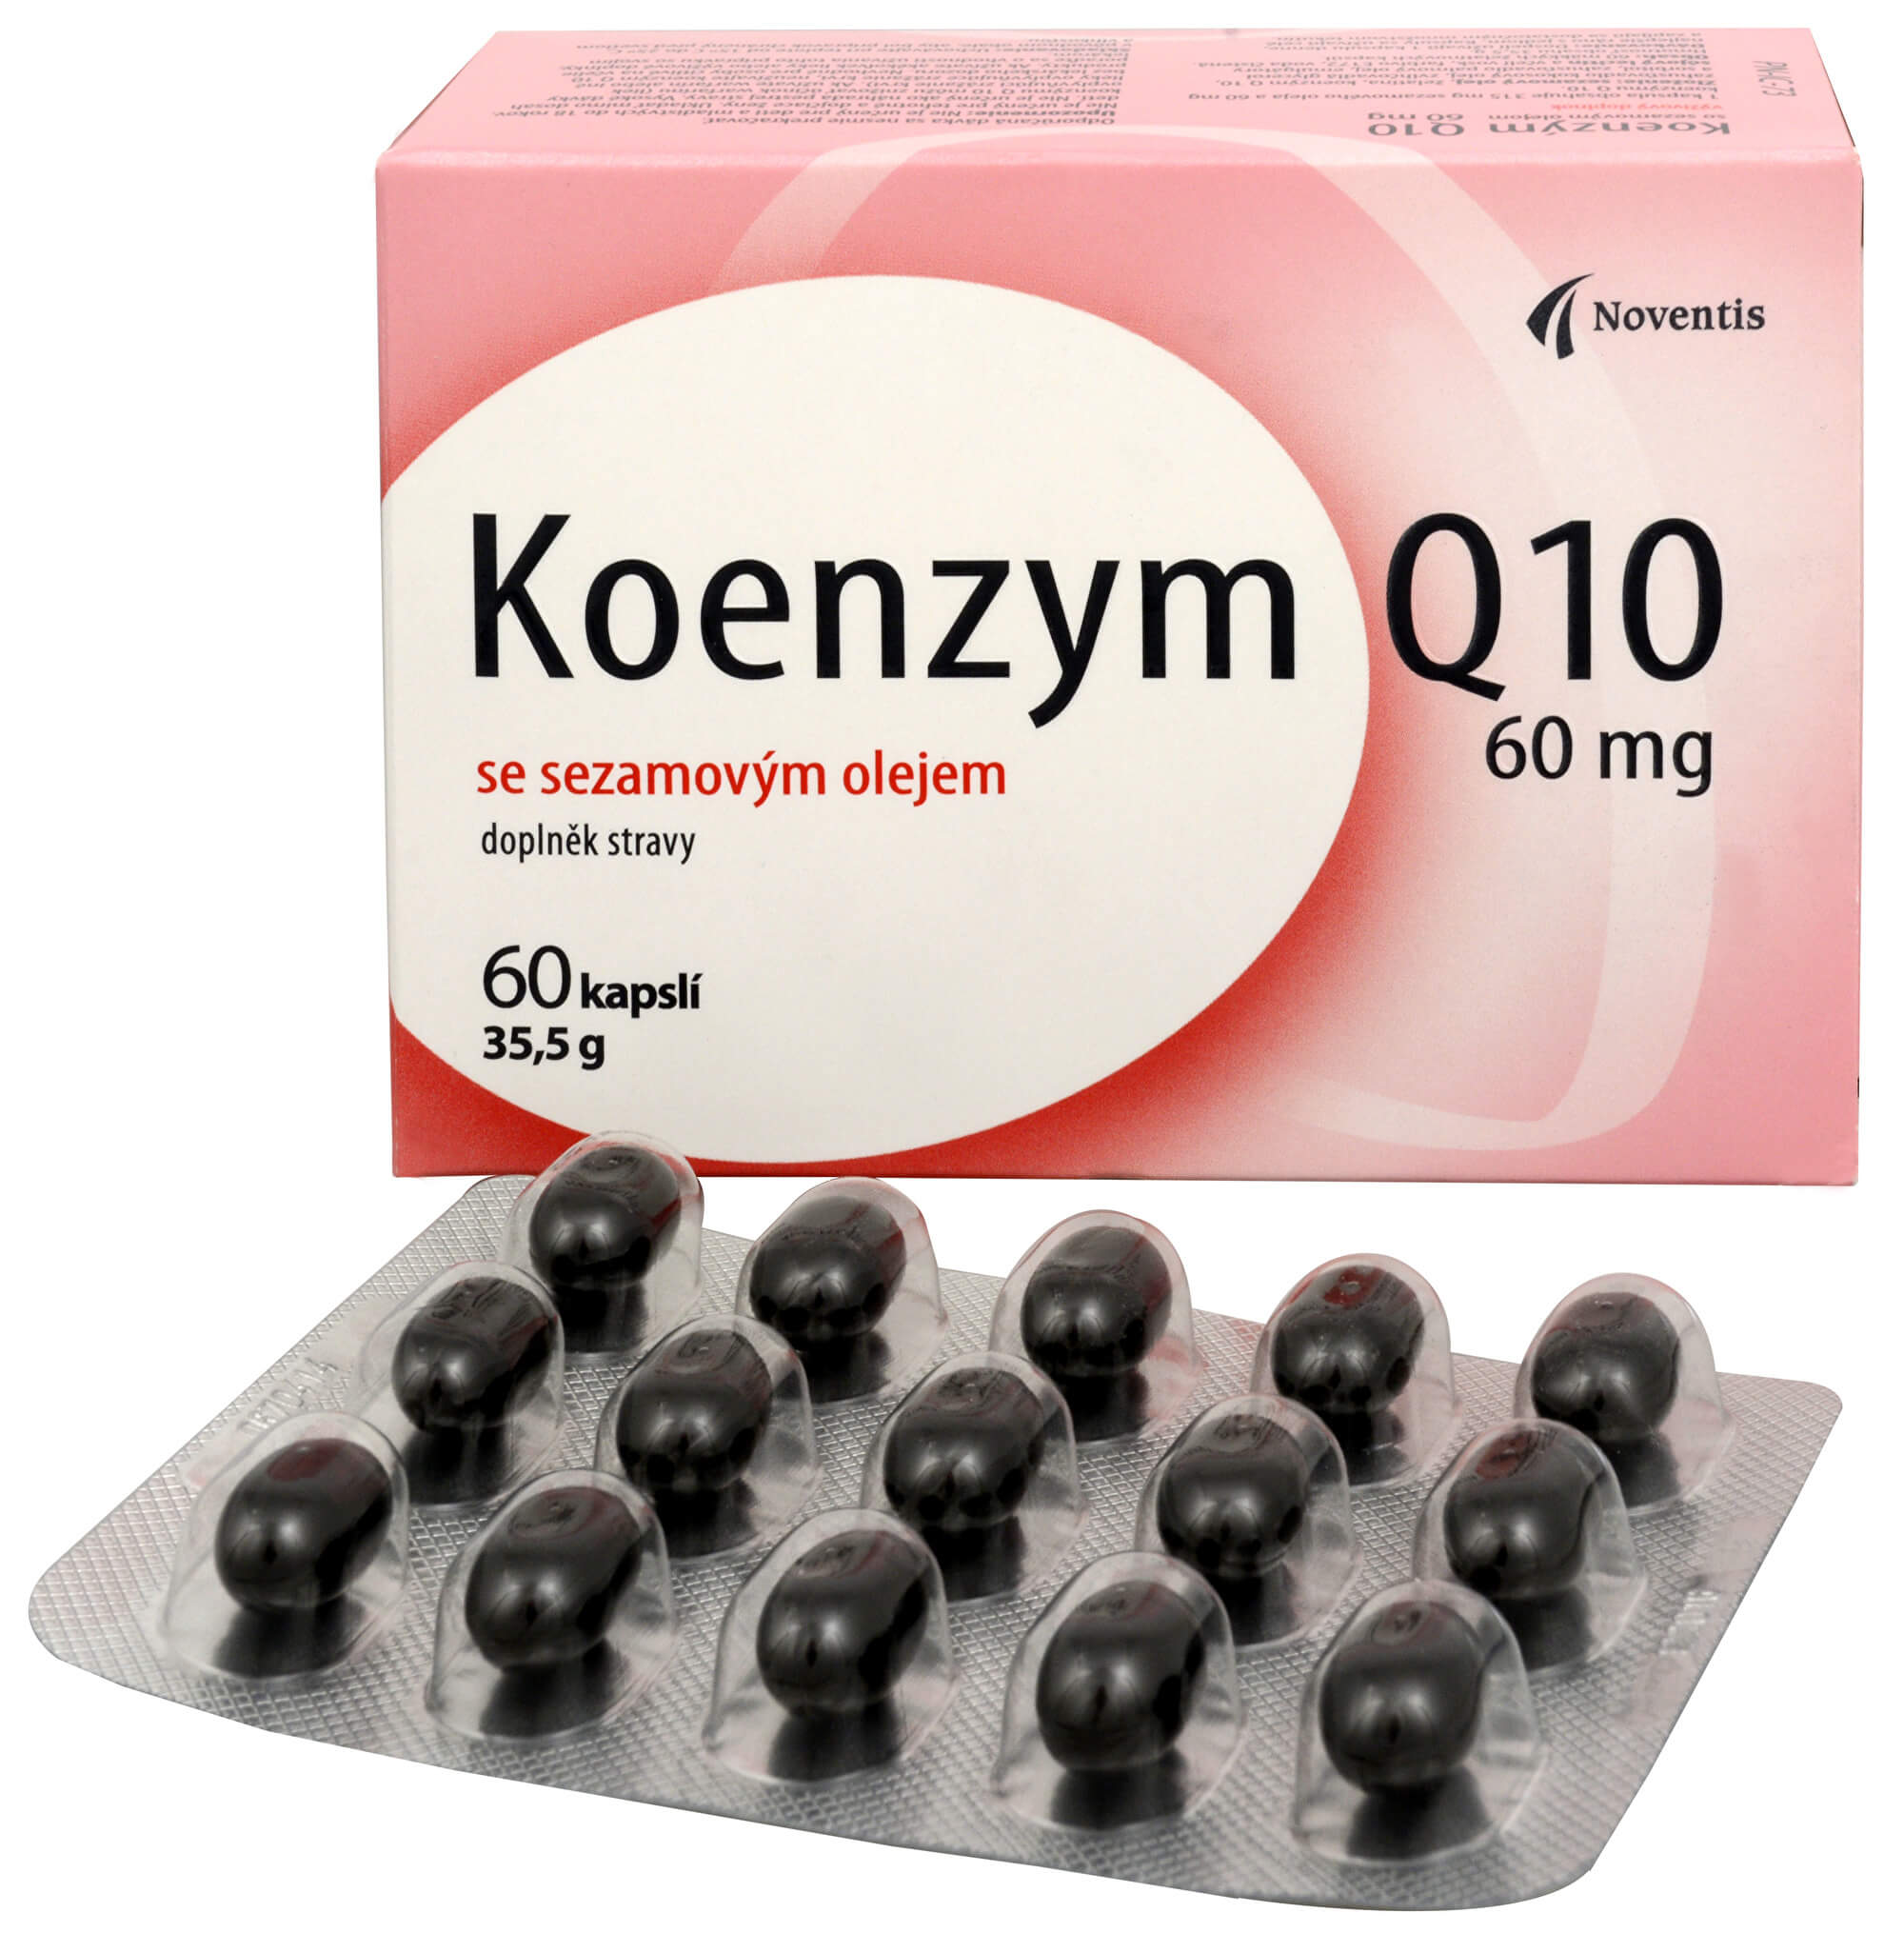 Zobrazit detail výrobku Noventis Koenzym Q10 60 mg se sezamovým olejem 60 kapslí